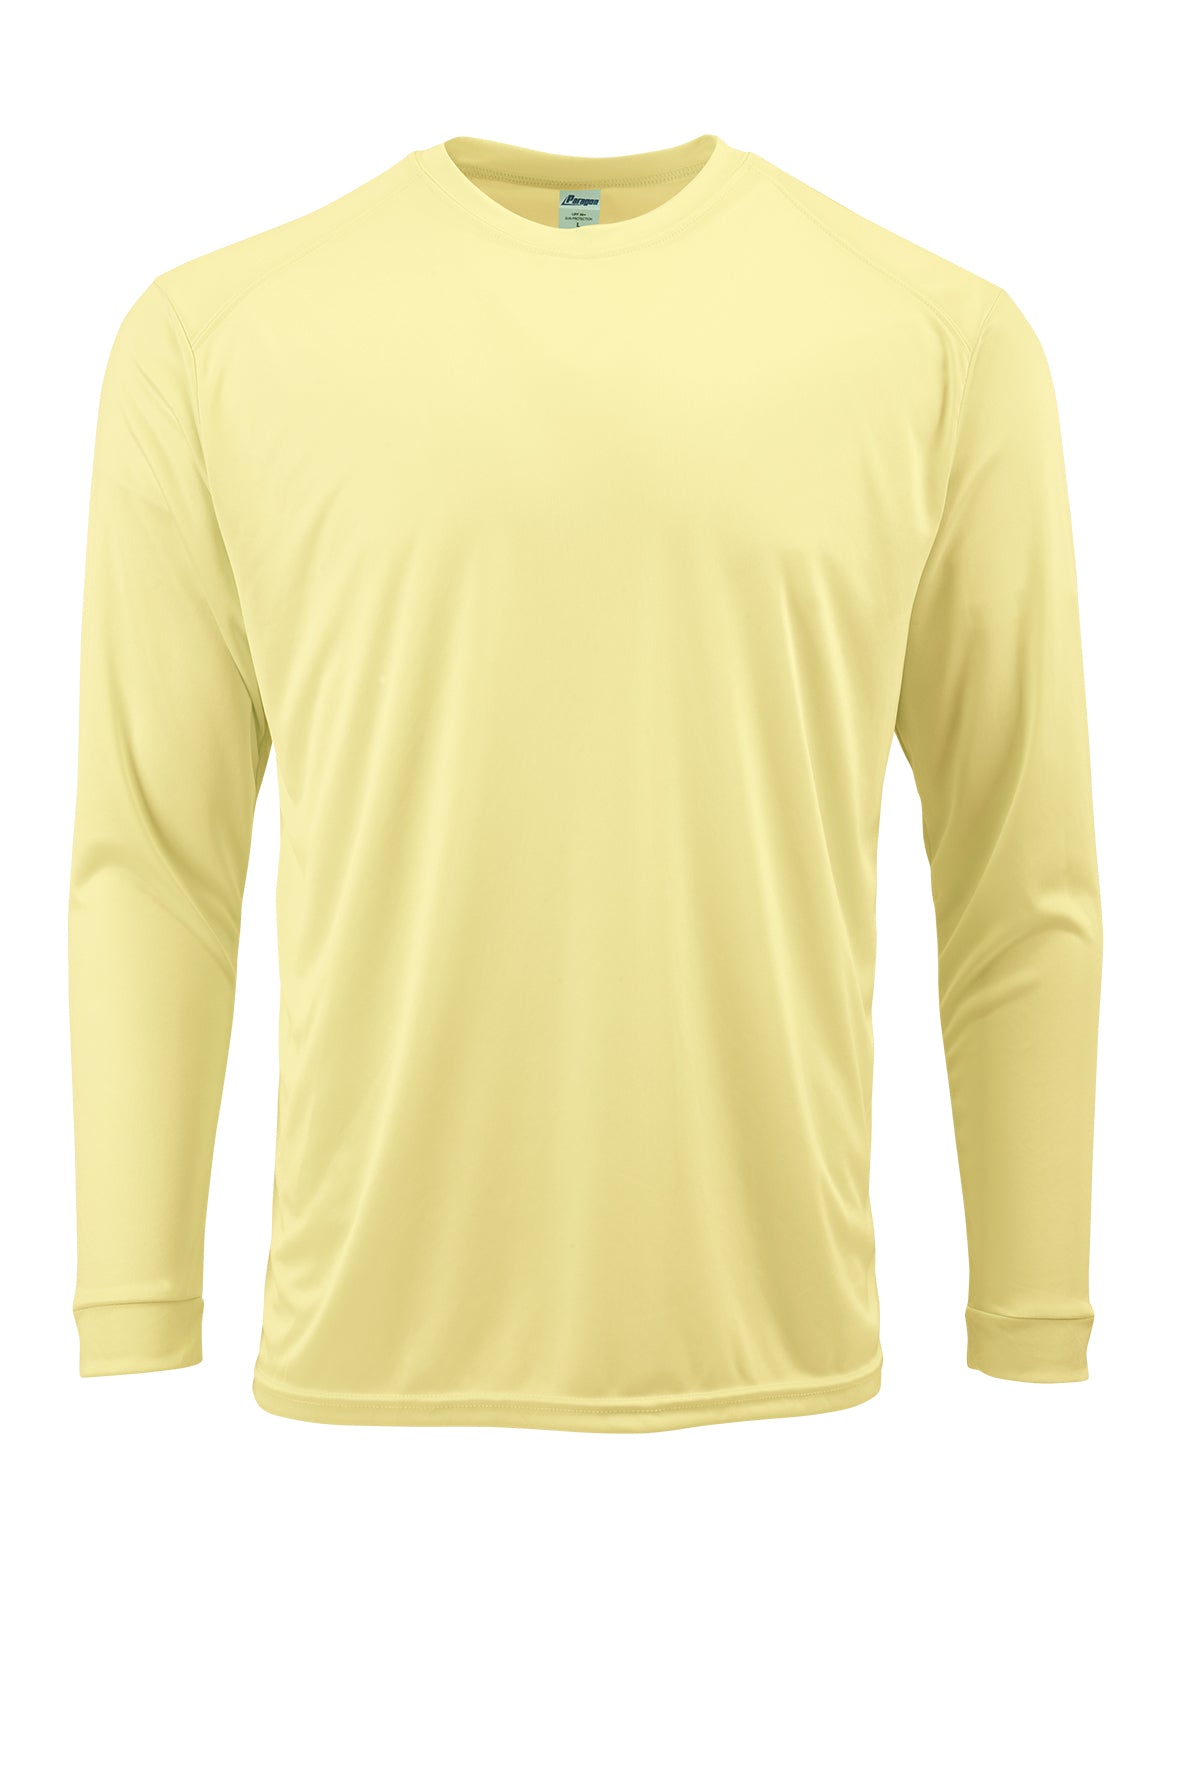 210PM Bright Color Islander Long Sleeve UPF50+ Shirt